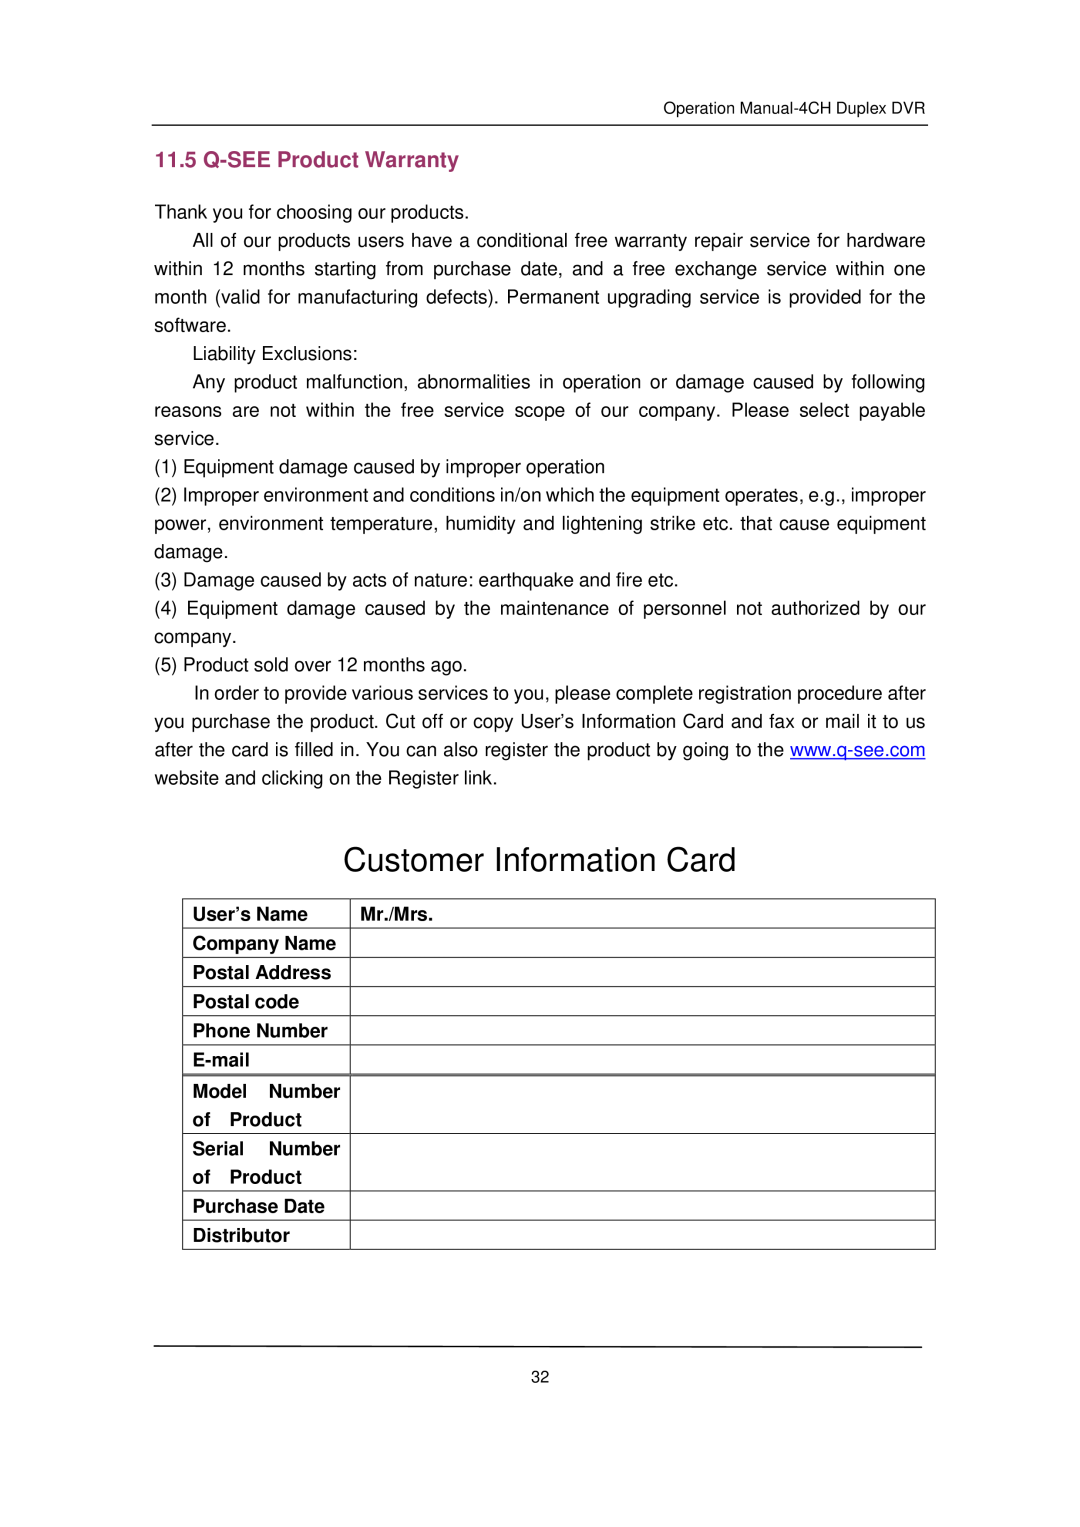 Q-See QSD371614C4-250 user manual Q-SEEProduct Warranty, Customer Information Card 